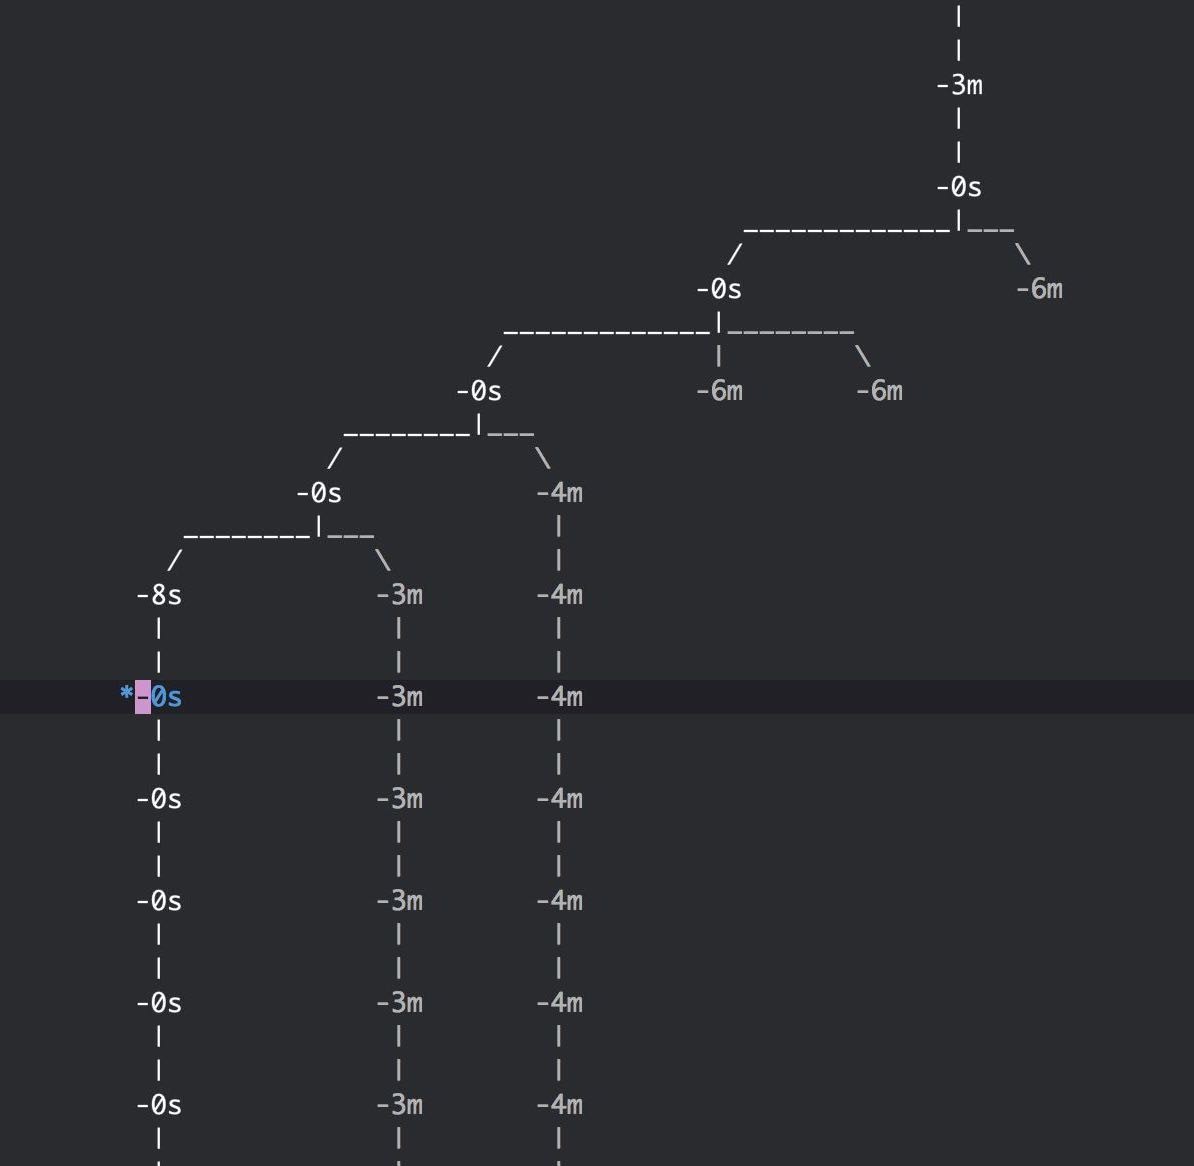 undo-tree in emacs